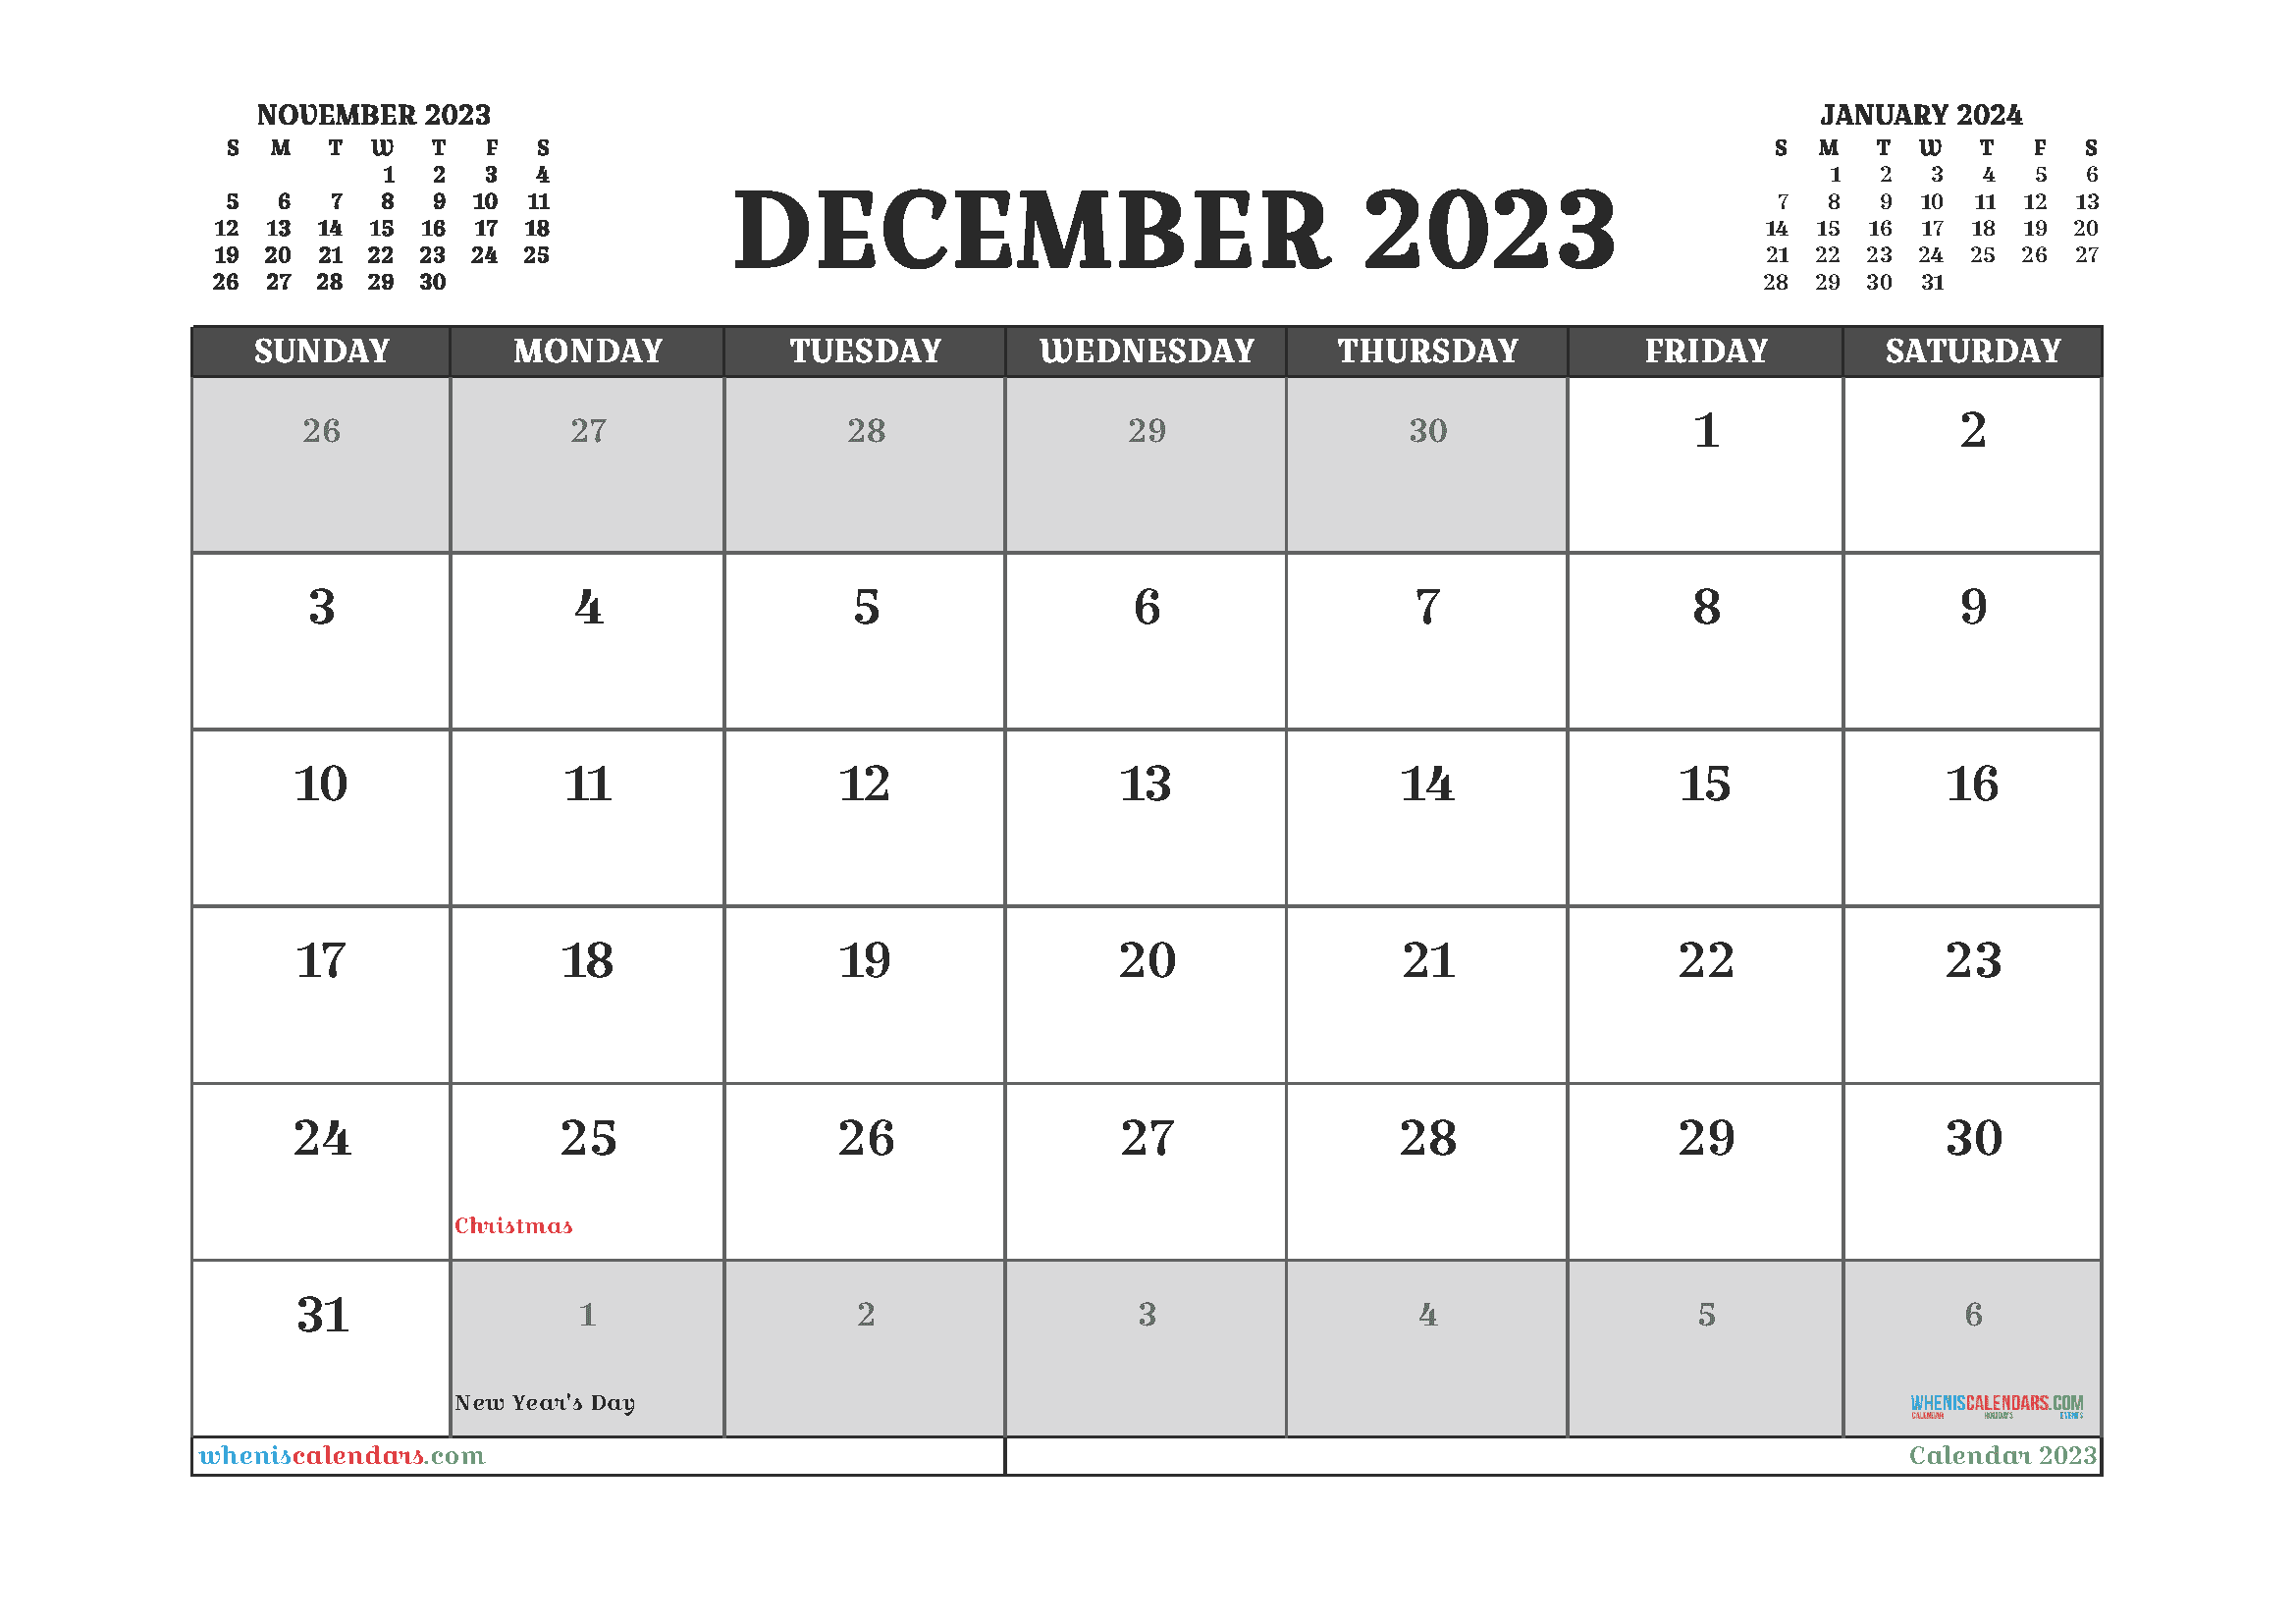 Download free printable December 2023 calendars